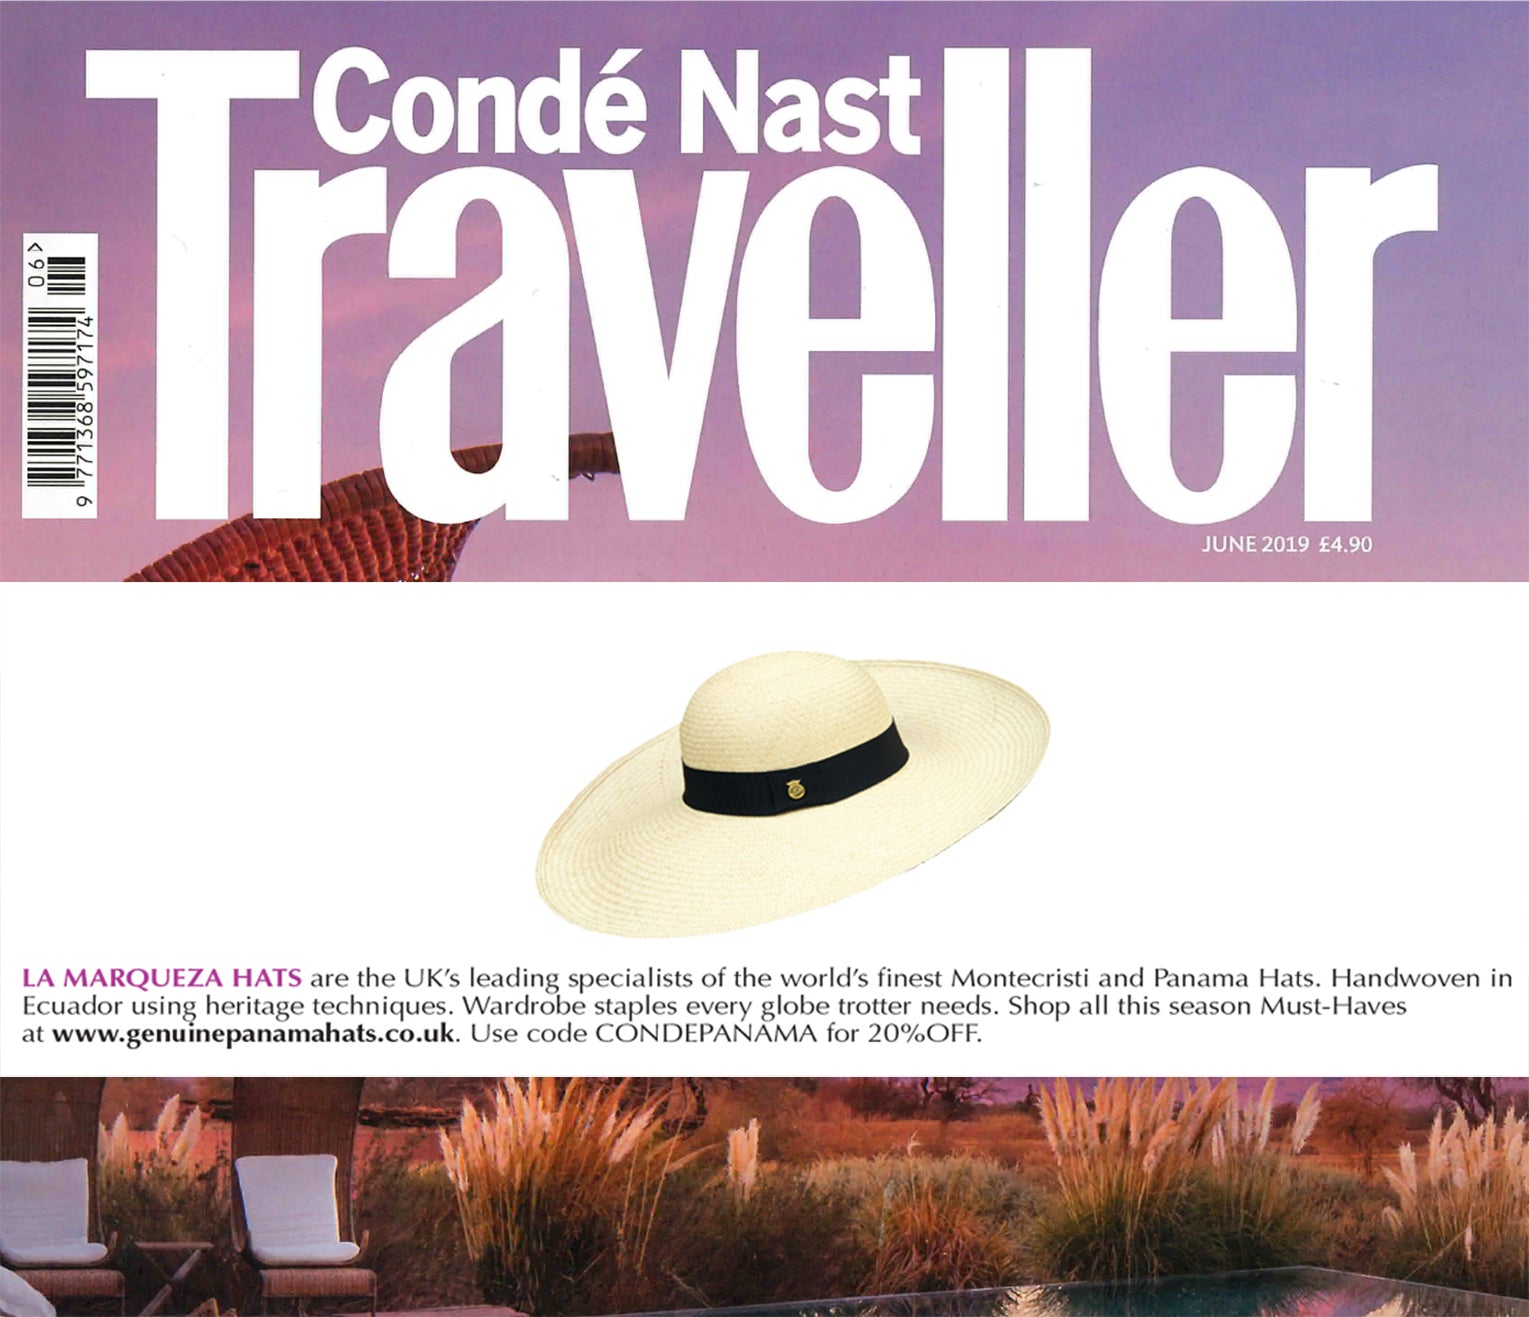 CONDE NAST TRAVELER FEATURES LA MARQUEZA HATS, Issue June 2019